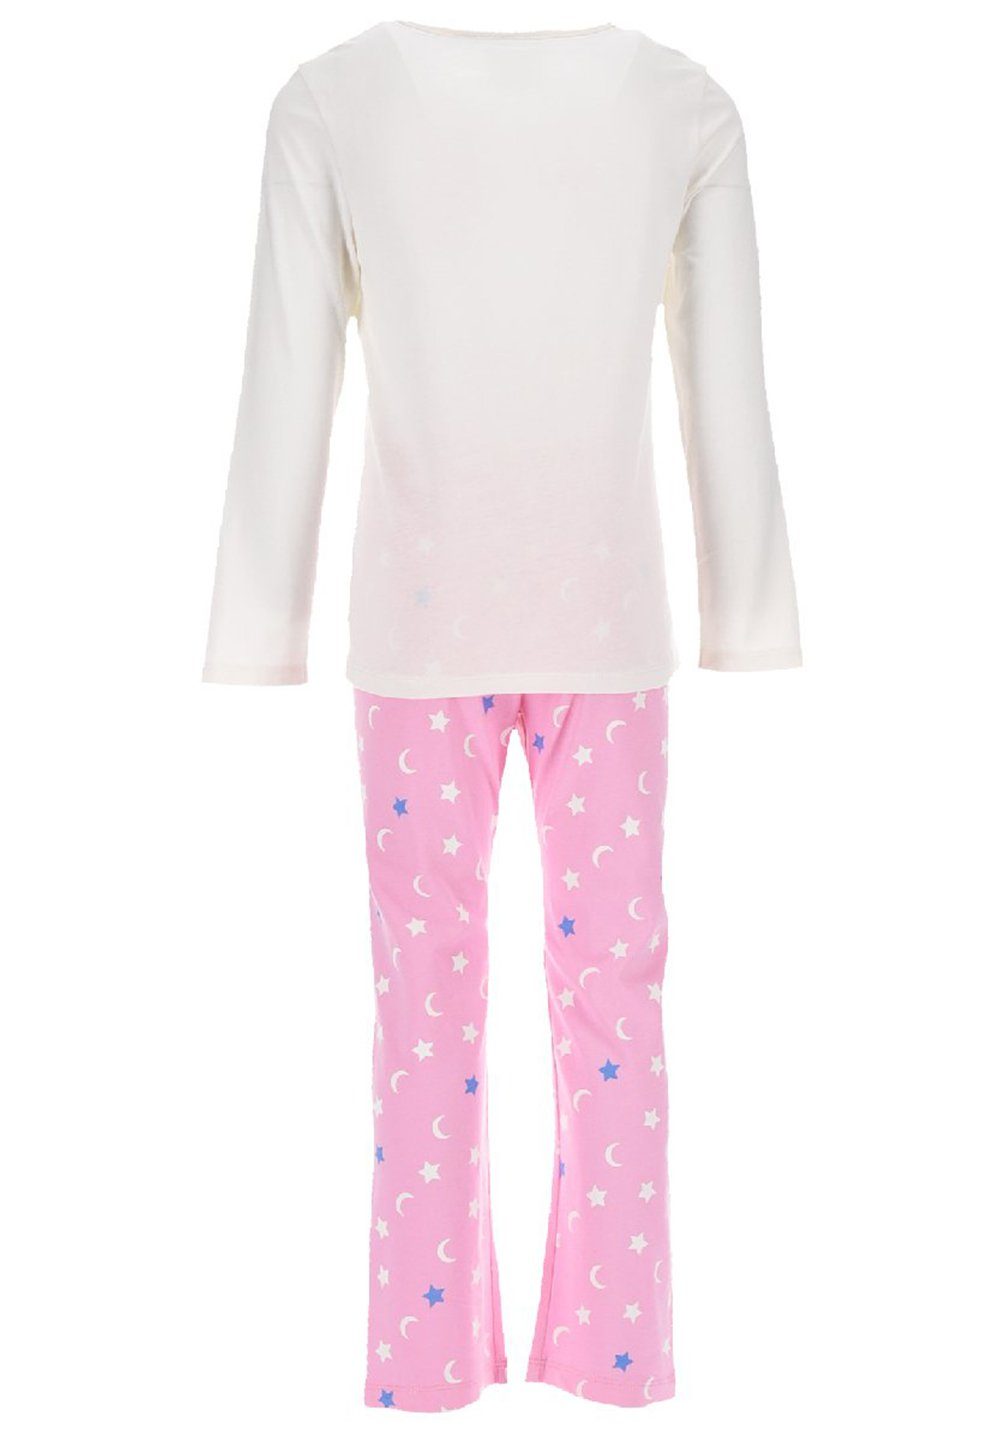 Langarm Schlaf-Hose Schlafanzug Weiß Kinder Kinder Mädchen Schlafanzug SURPRISE! Pyjama + Shirt L.O.L.